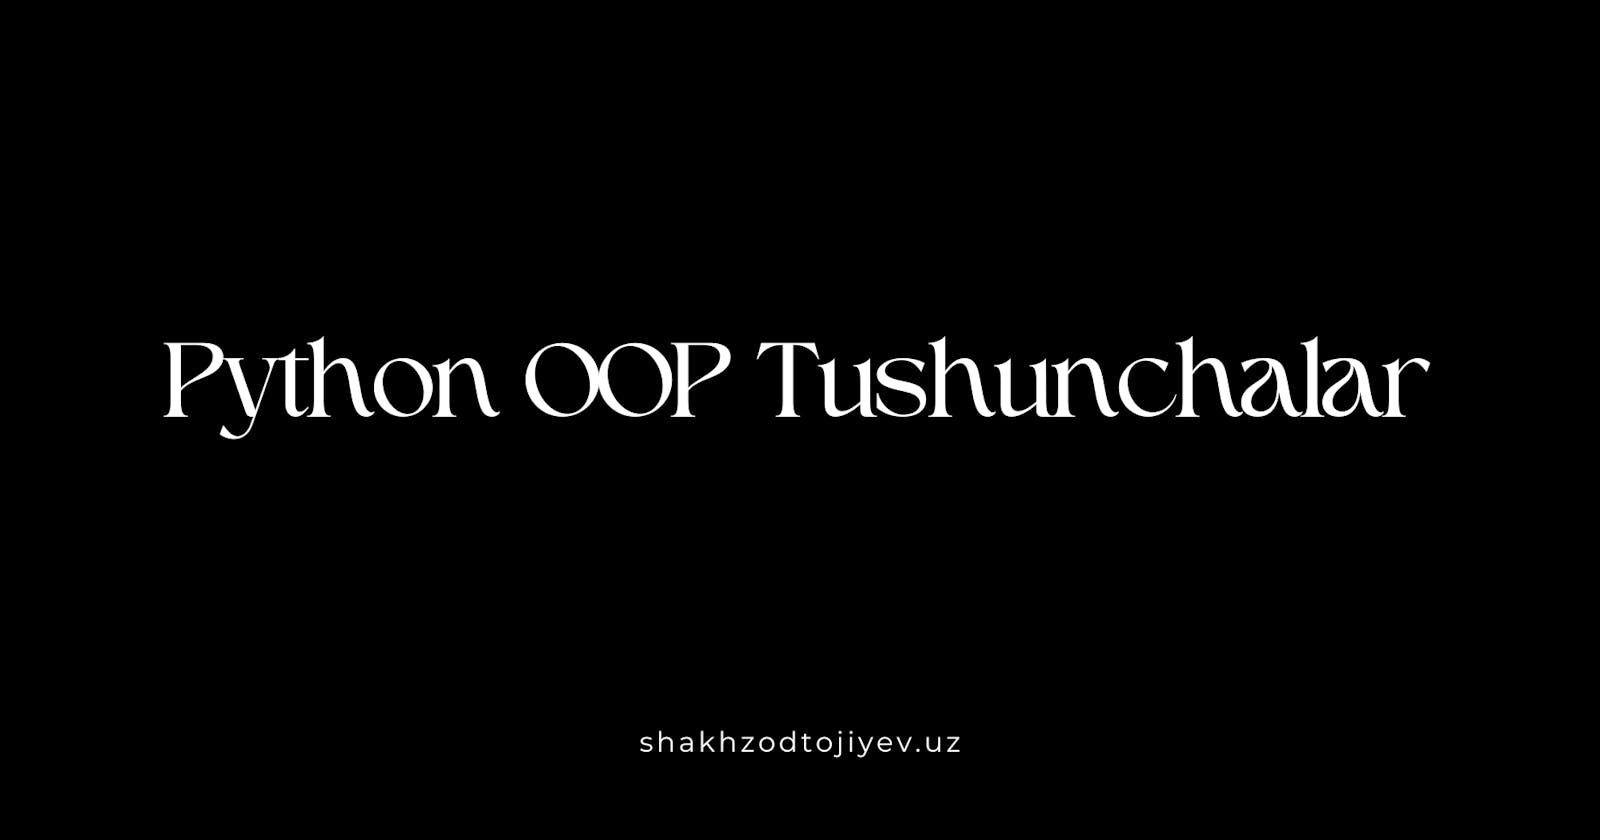 Python3-da OOP (Object Oriented Programming) tushunchalari